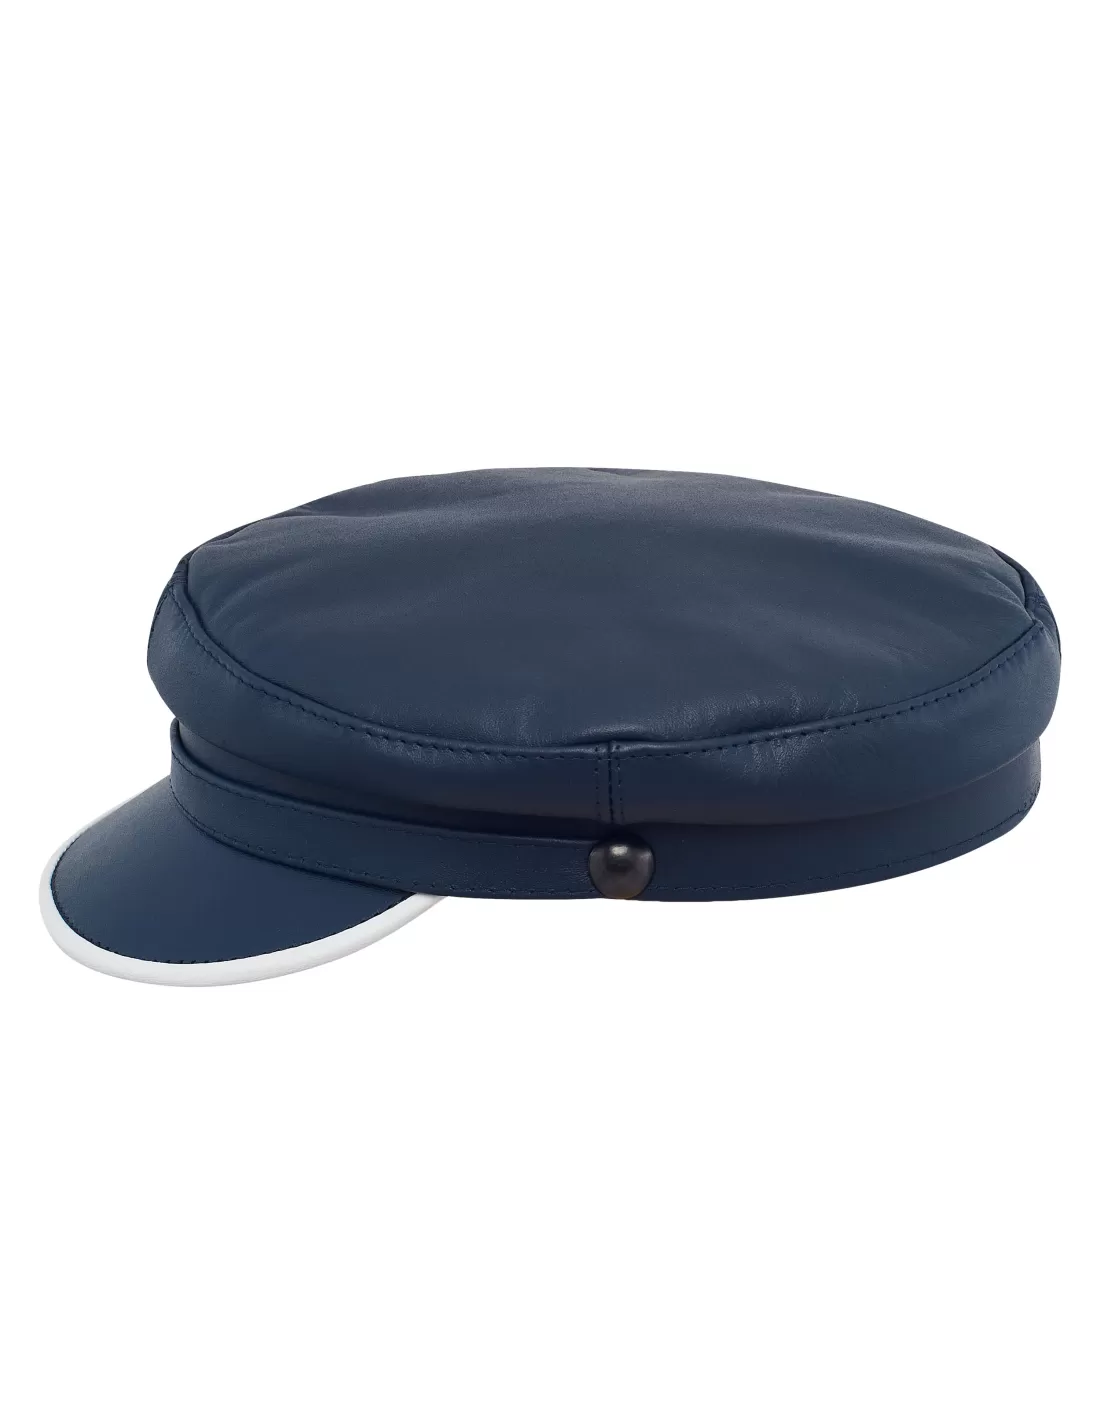 Trawler - fisherman hat, sailor cap made of 100% natural leather